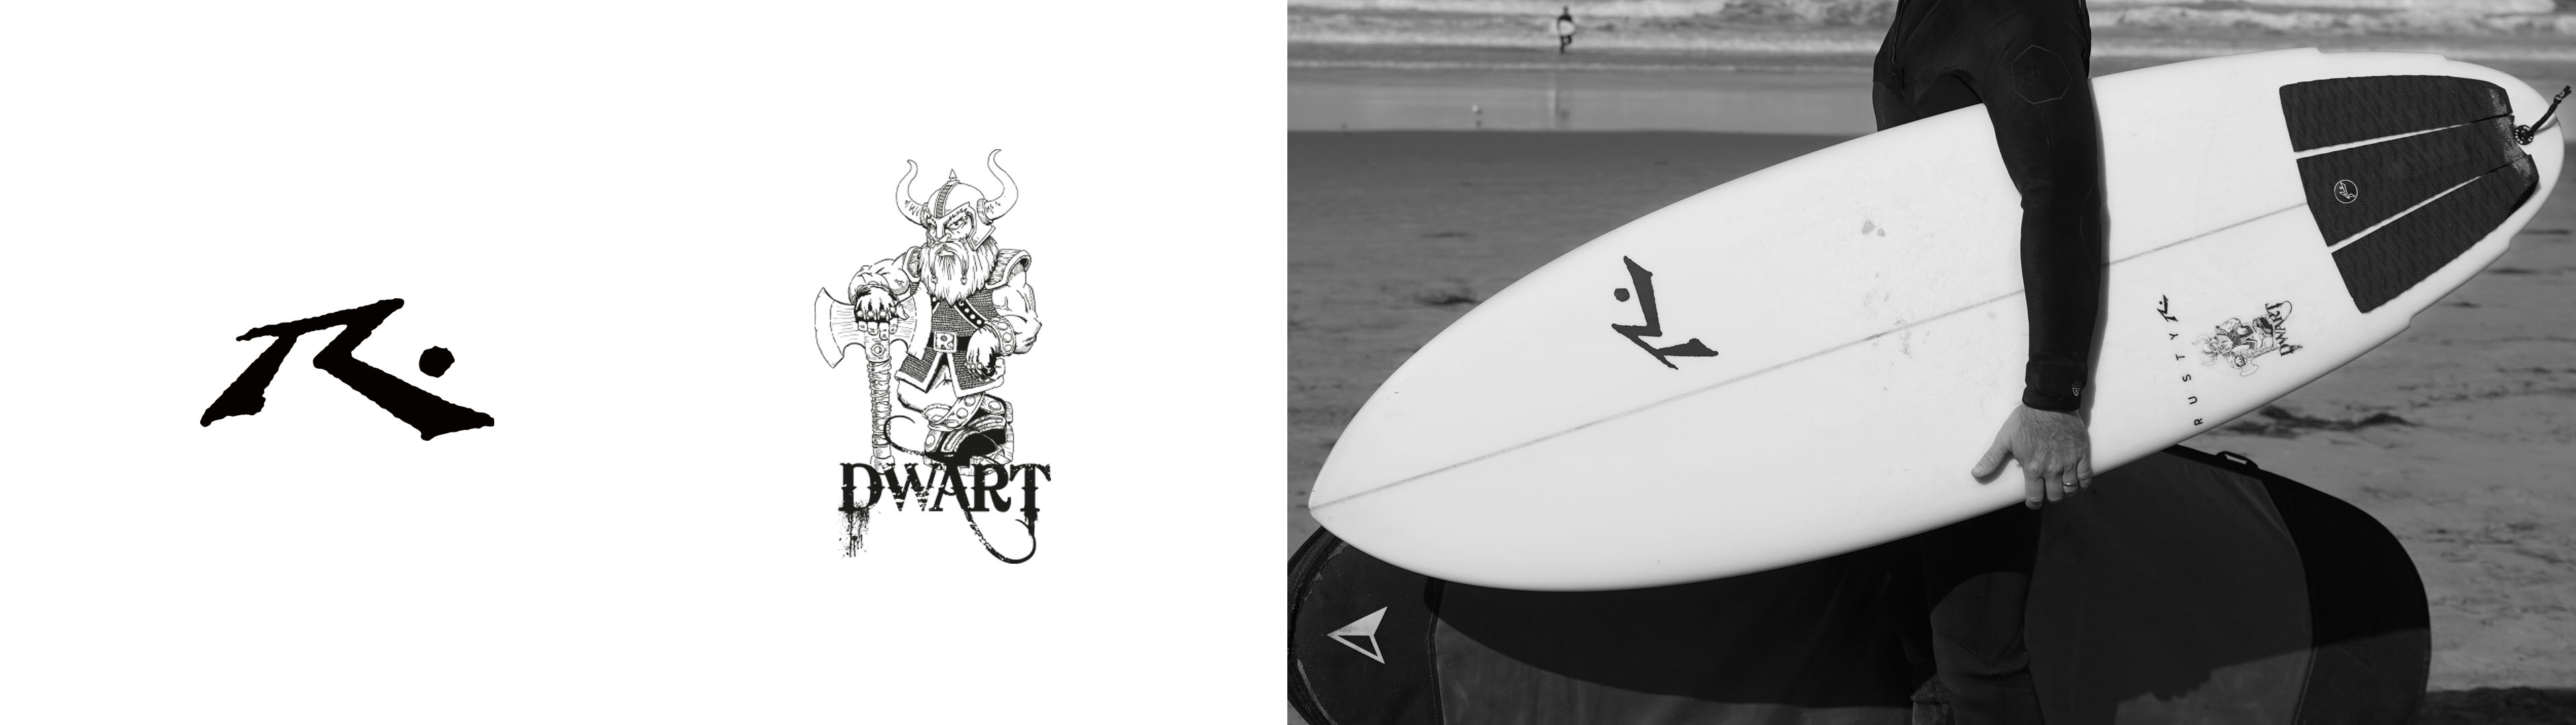 RUSTY DWART Shortboard surfboard in ACT und TEC Surfbrett Header